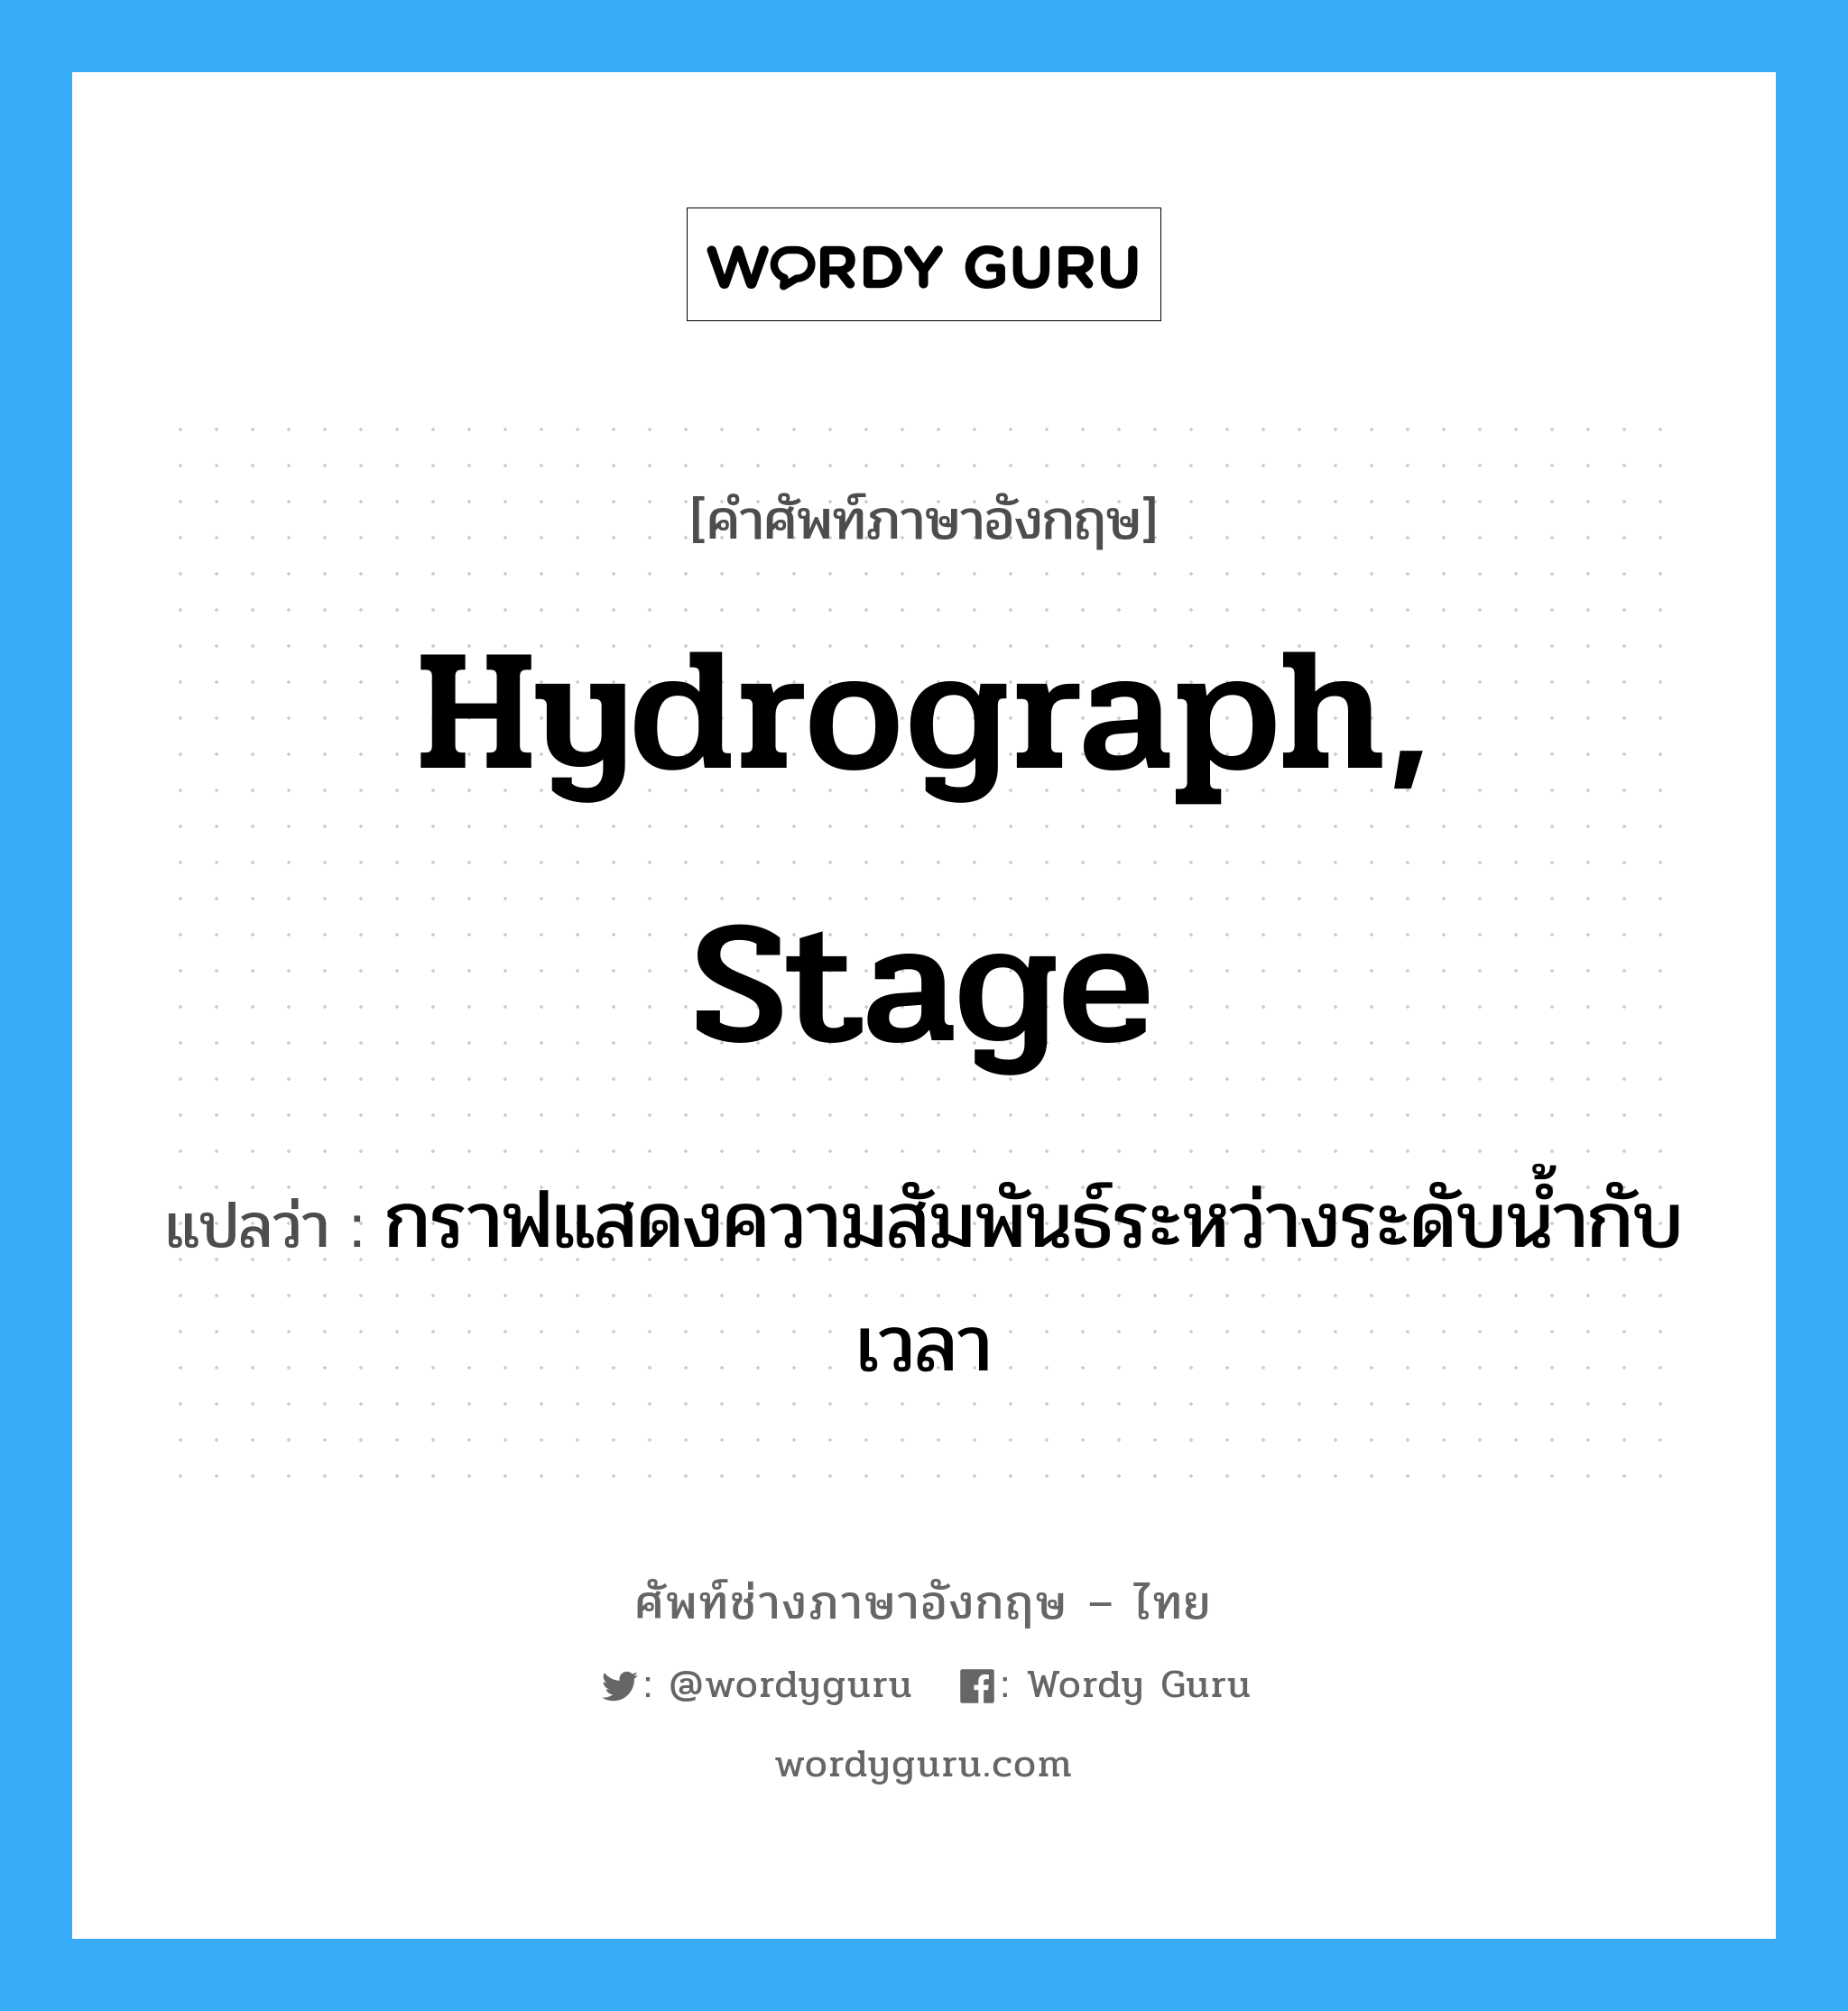 hydrograph, stage แปลว่า?, คำศัพท์ช่างภาษาอังกฤษ - ไทย hydrograph, stage คำศัพท์ภาษาอังกฤษ hydrograph, stage แปลว่า กราฟแสดงความสัมพันธ์ระหว่างระดับน้ำกับเวลา